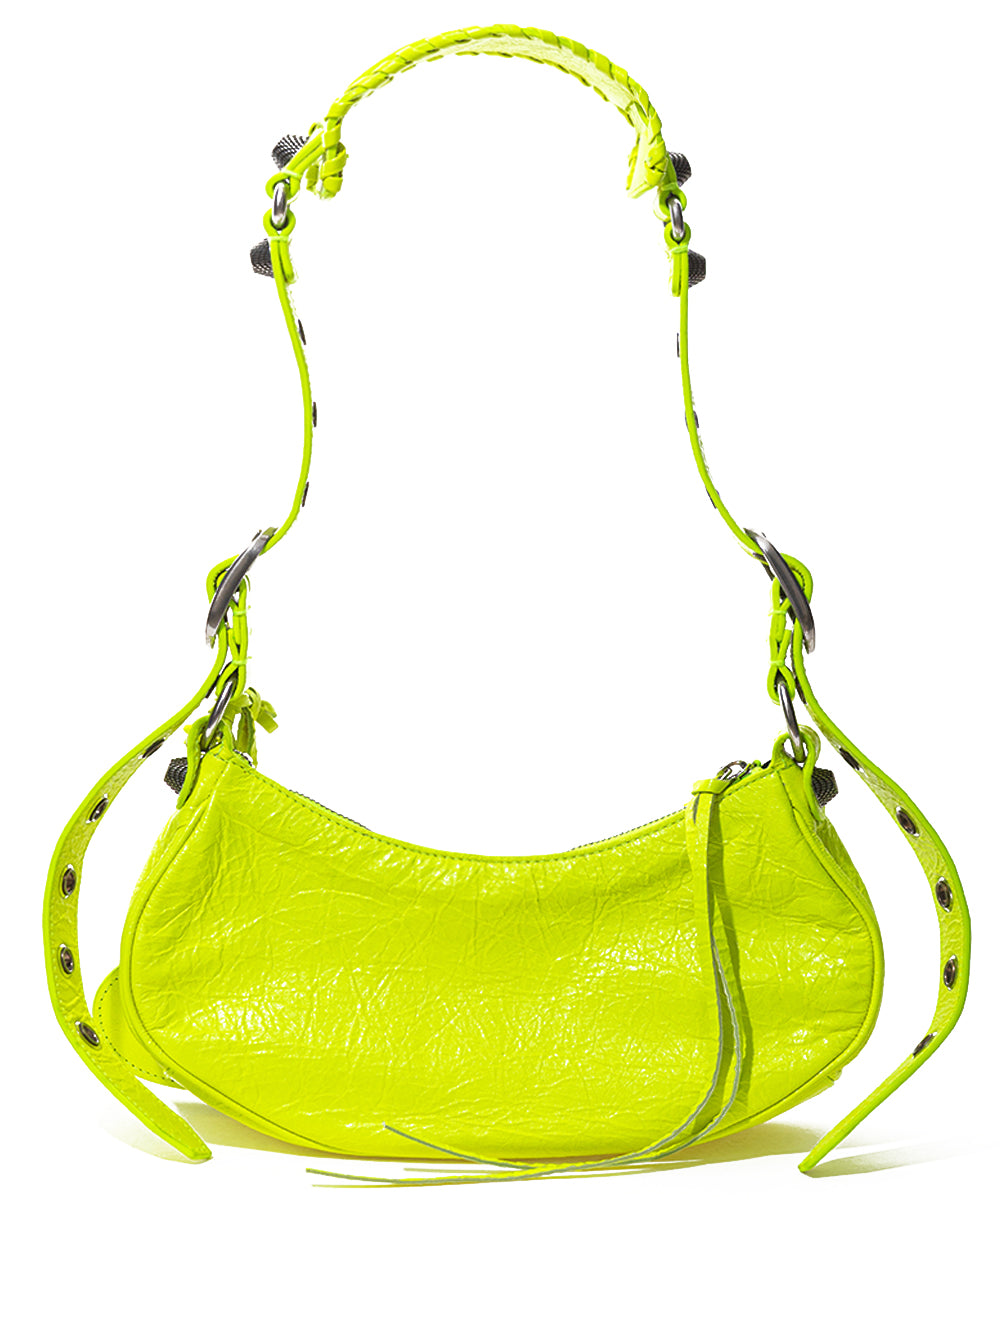 Neon Yellow Leather Shoulder Bag Extravaganza